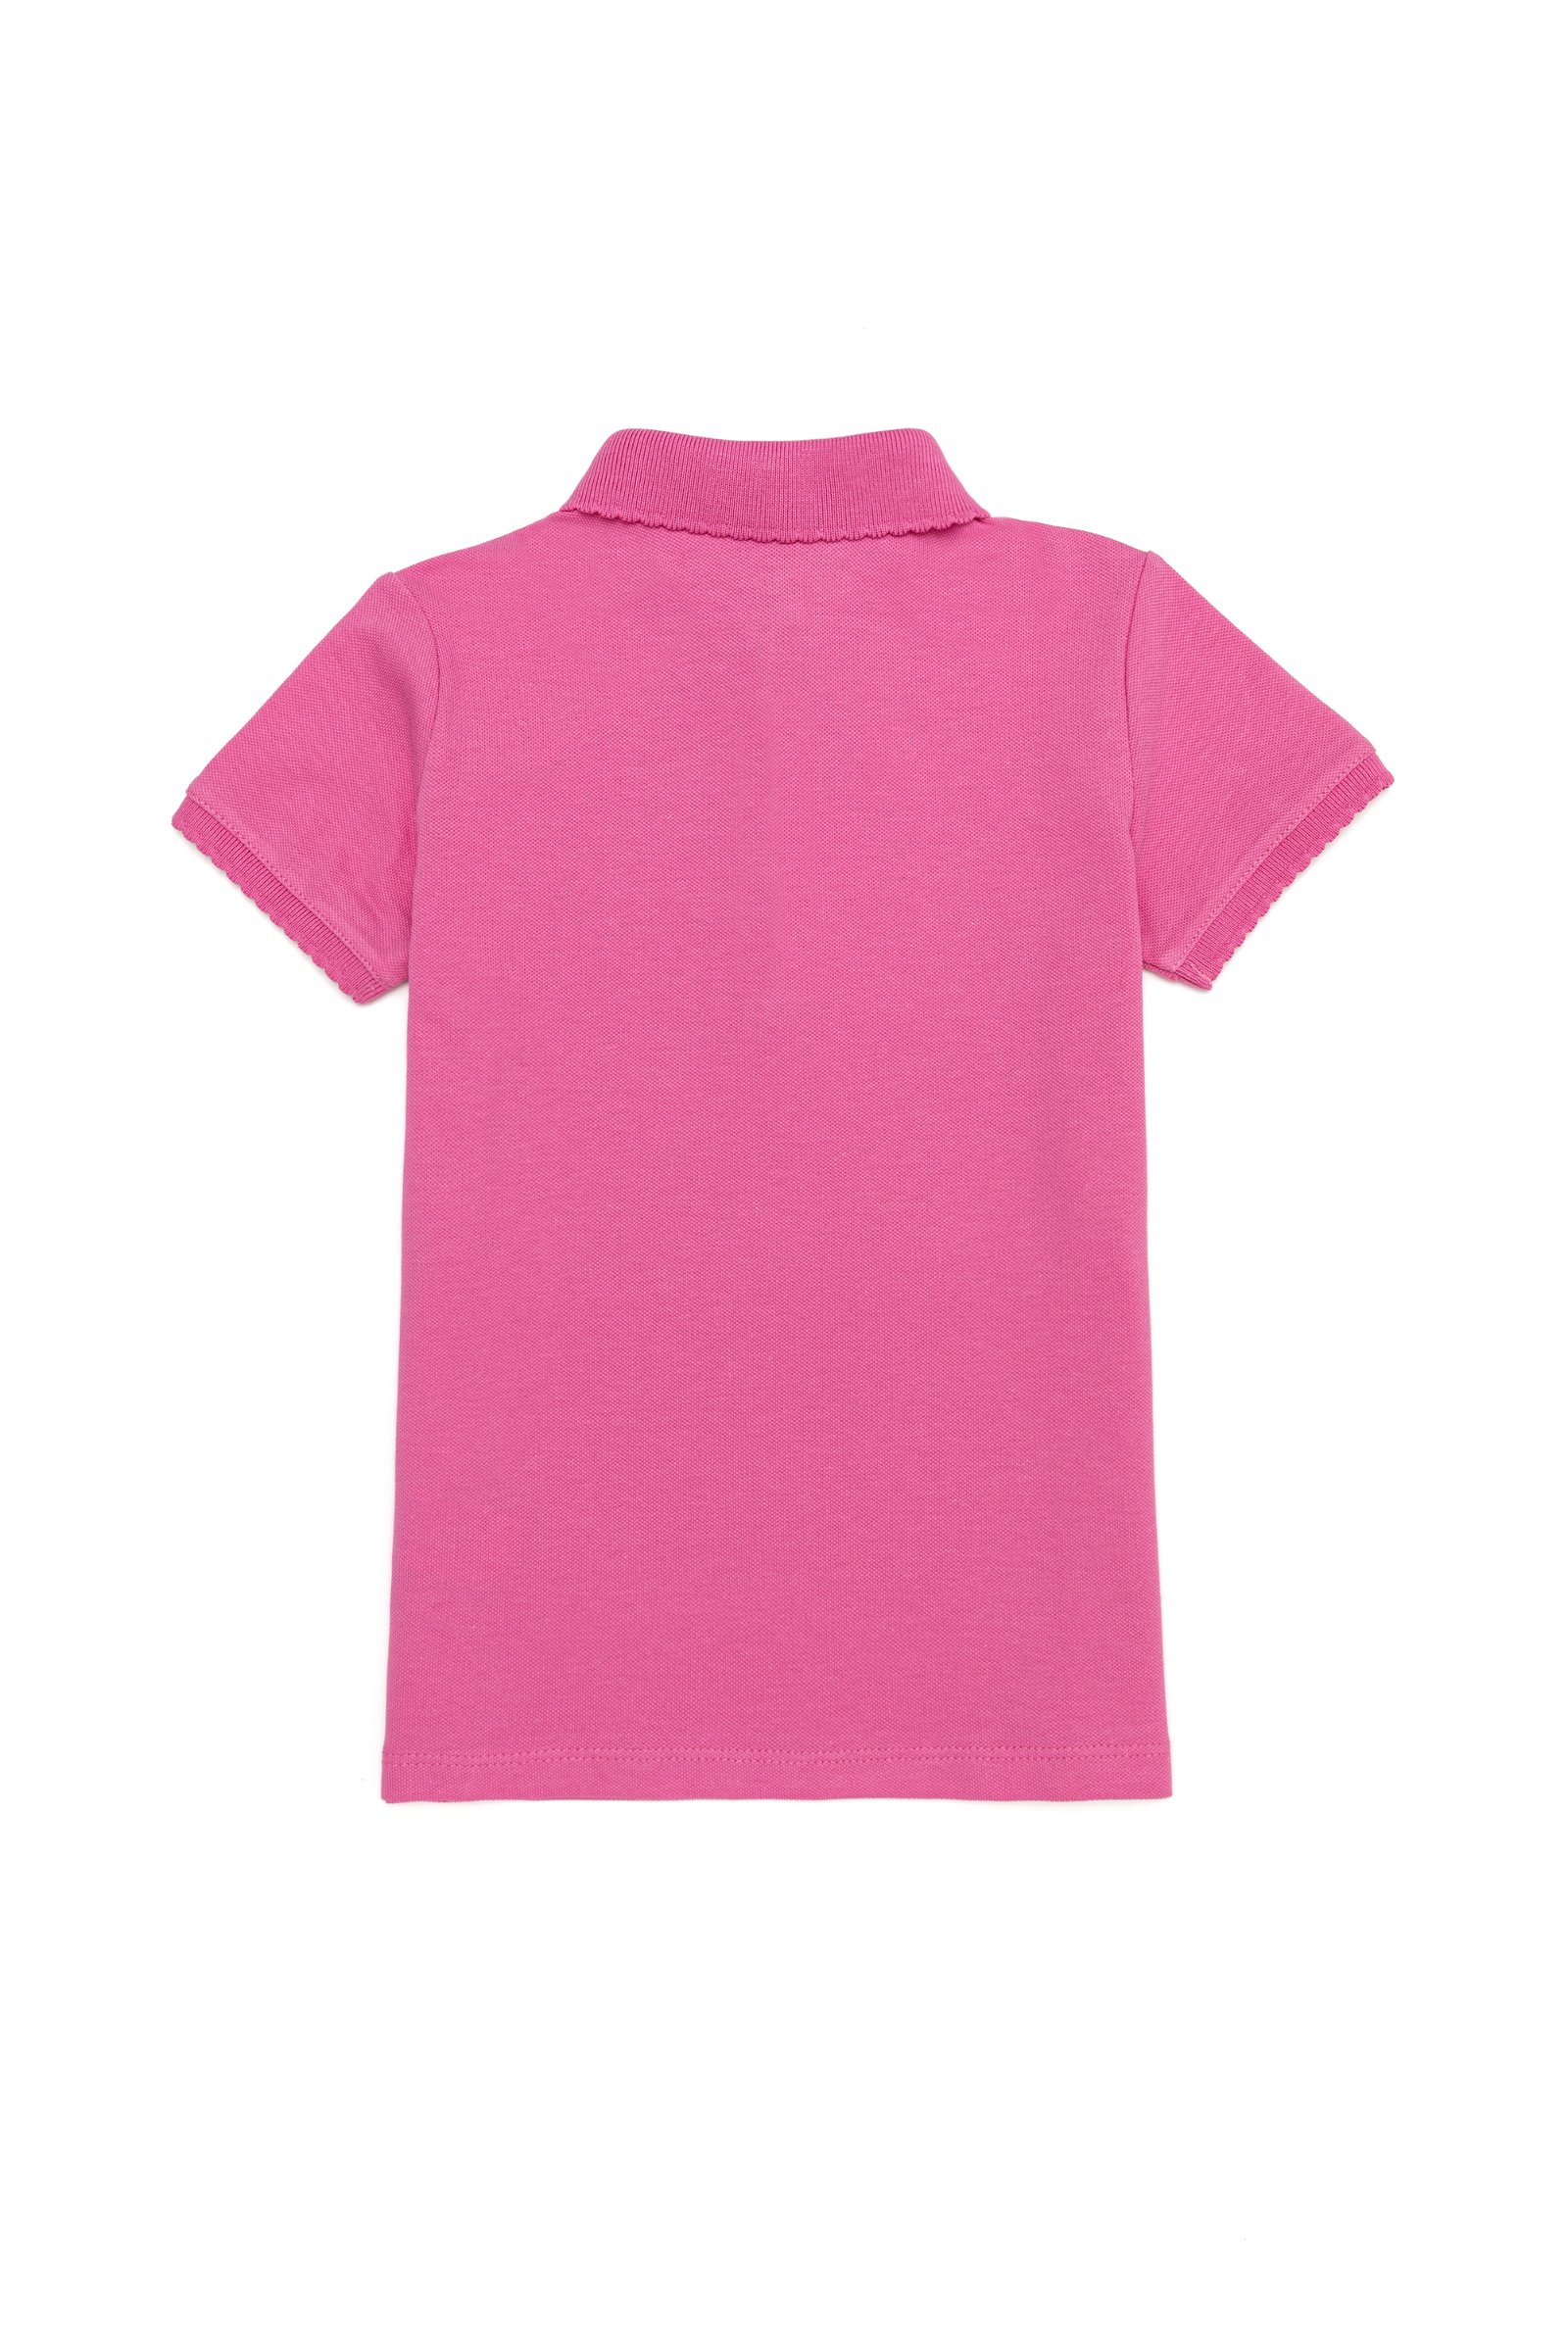 تی شرت یقه پولو صورتی  استاندارد فیت  دخترانه یو اس پولو | US POLO ASSN